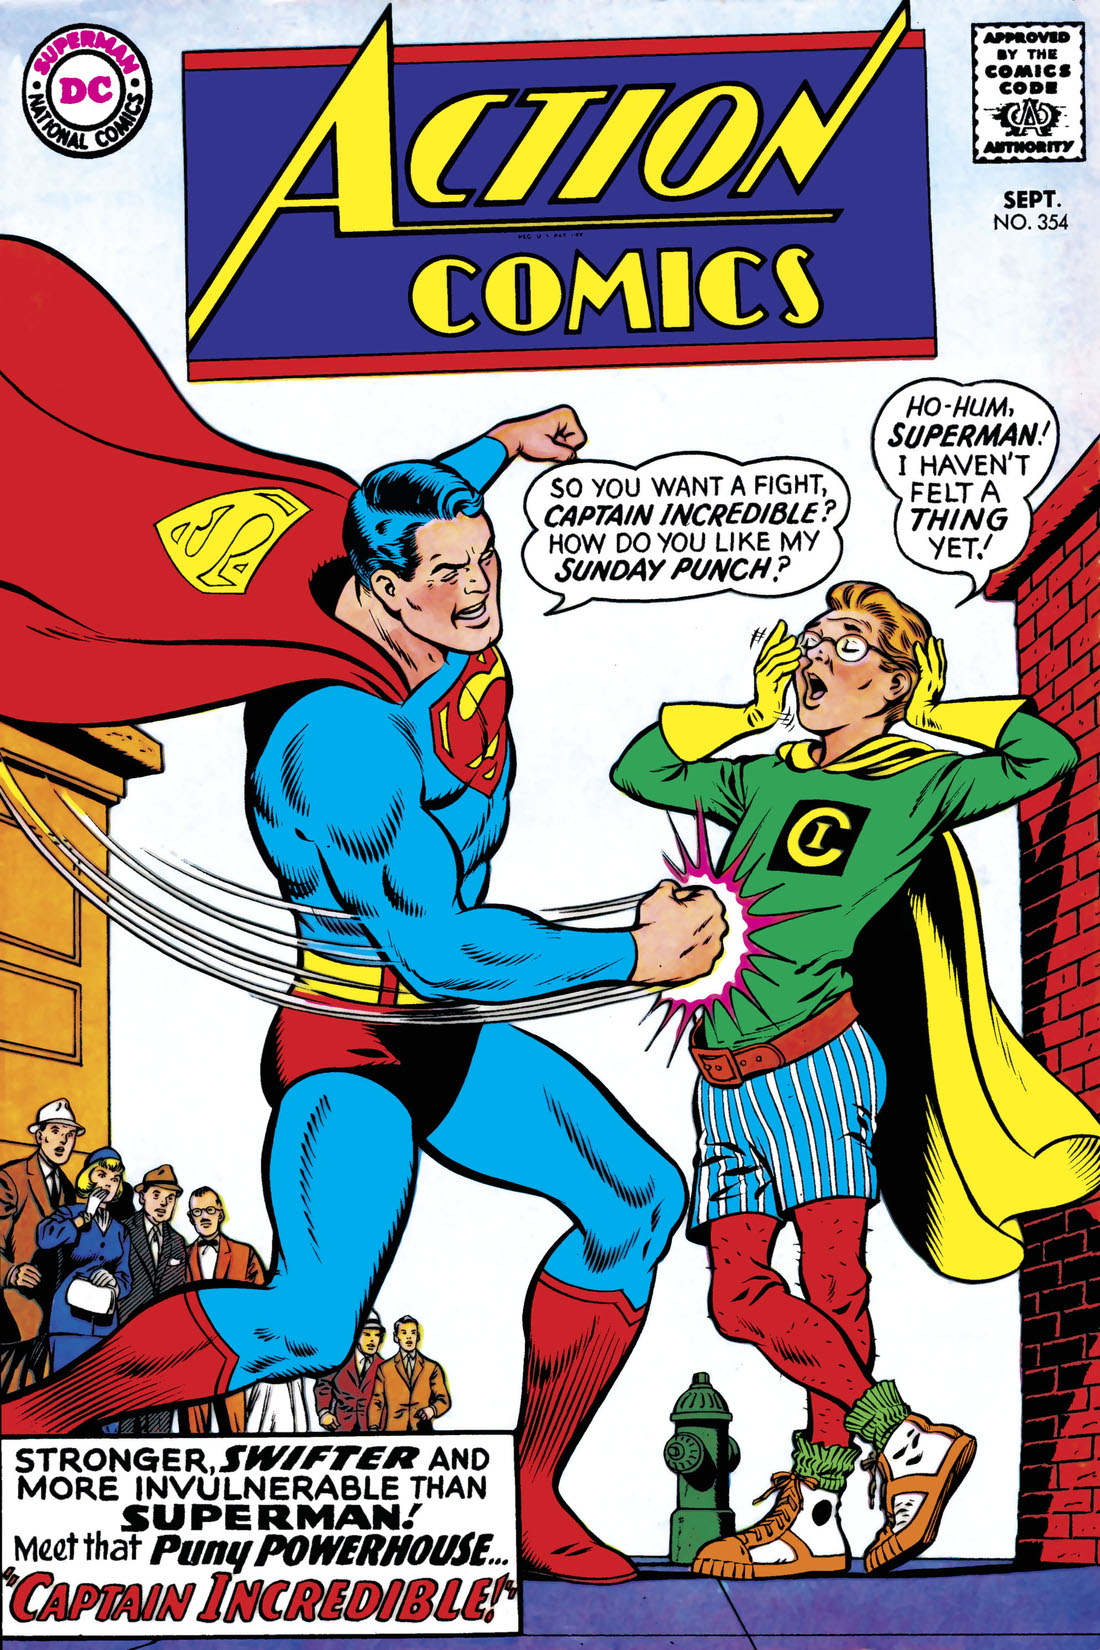 Action Comics (1938-) #354 preview images